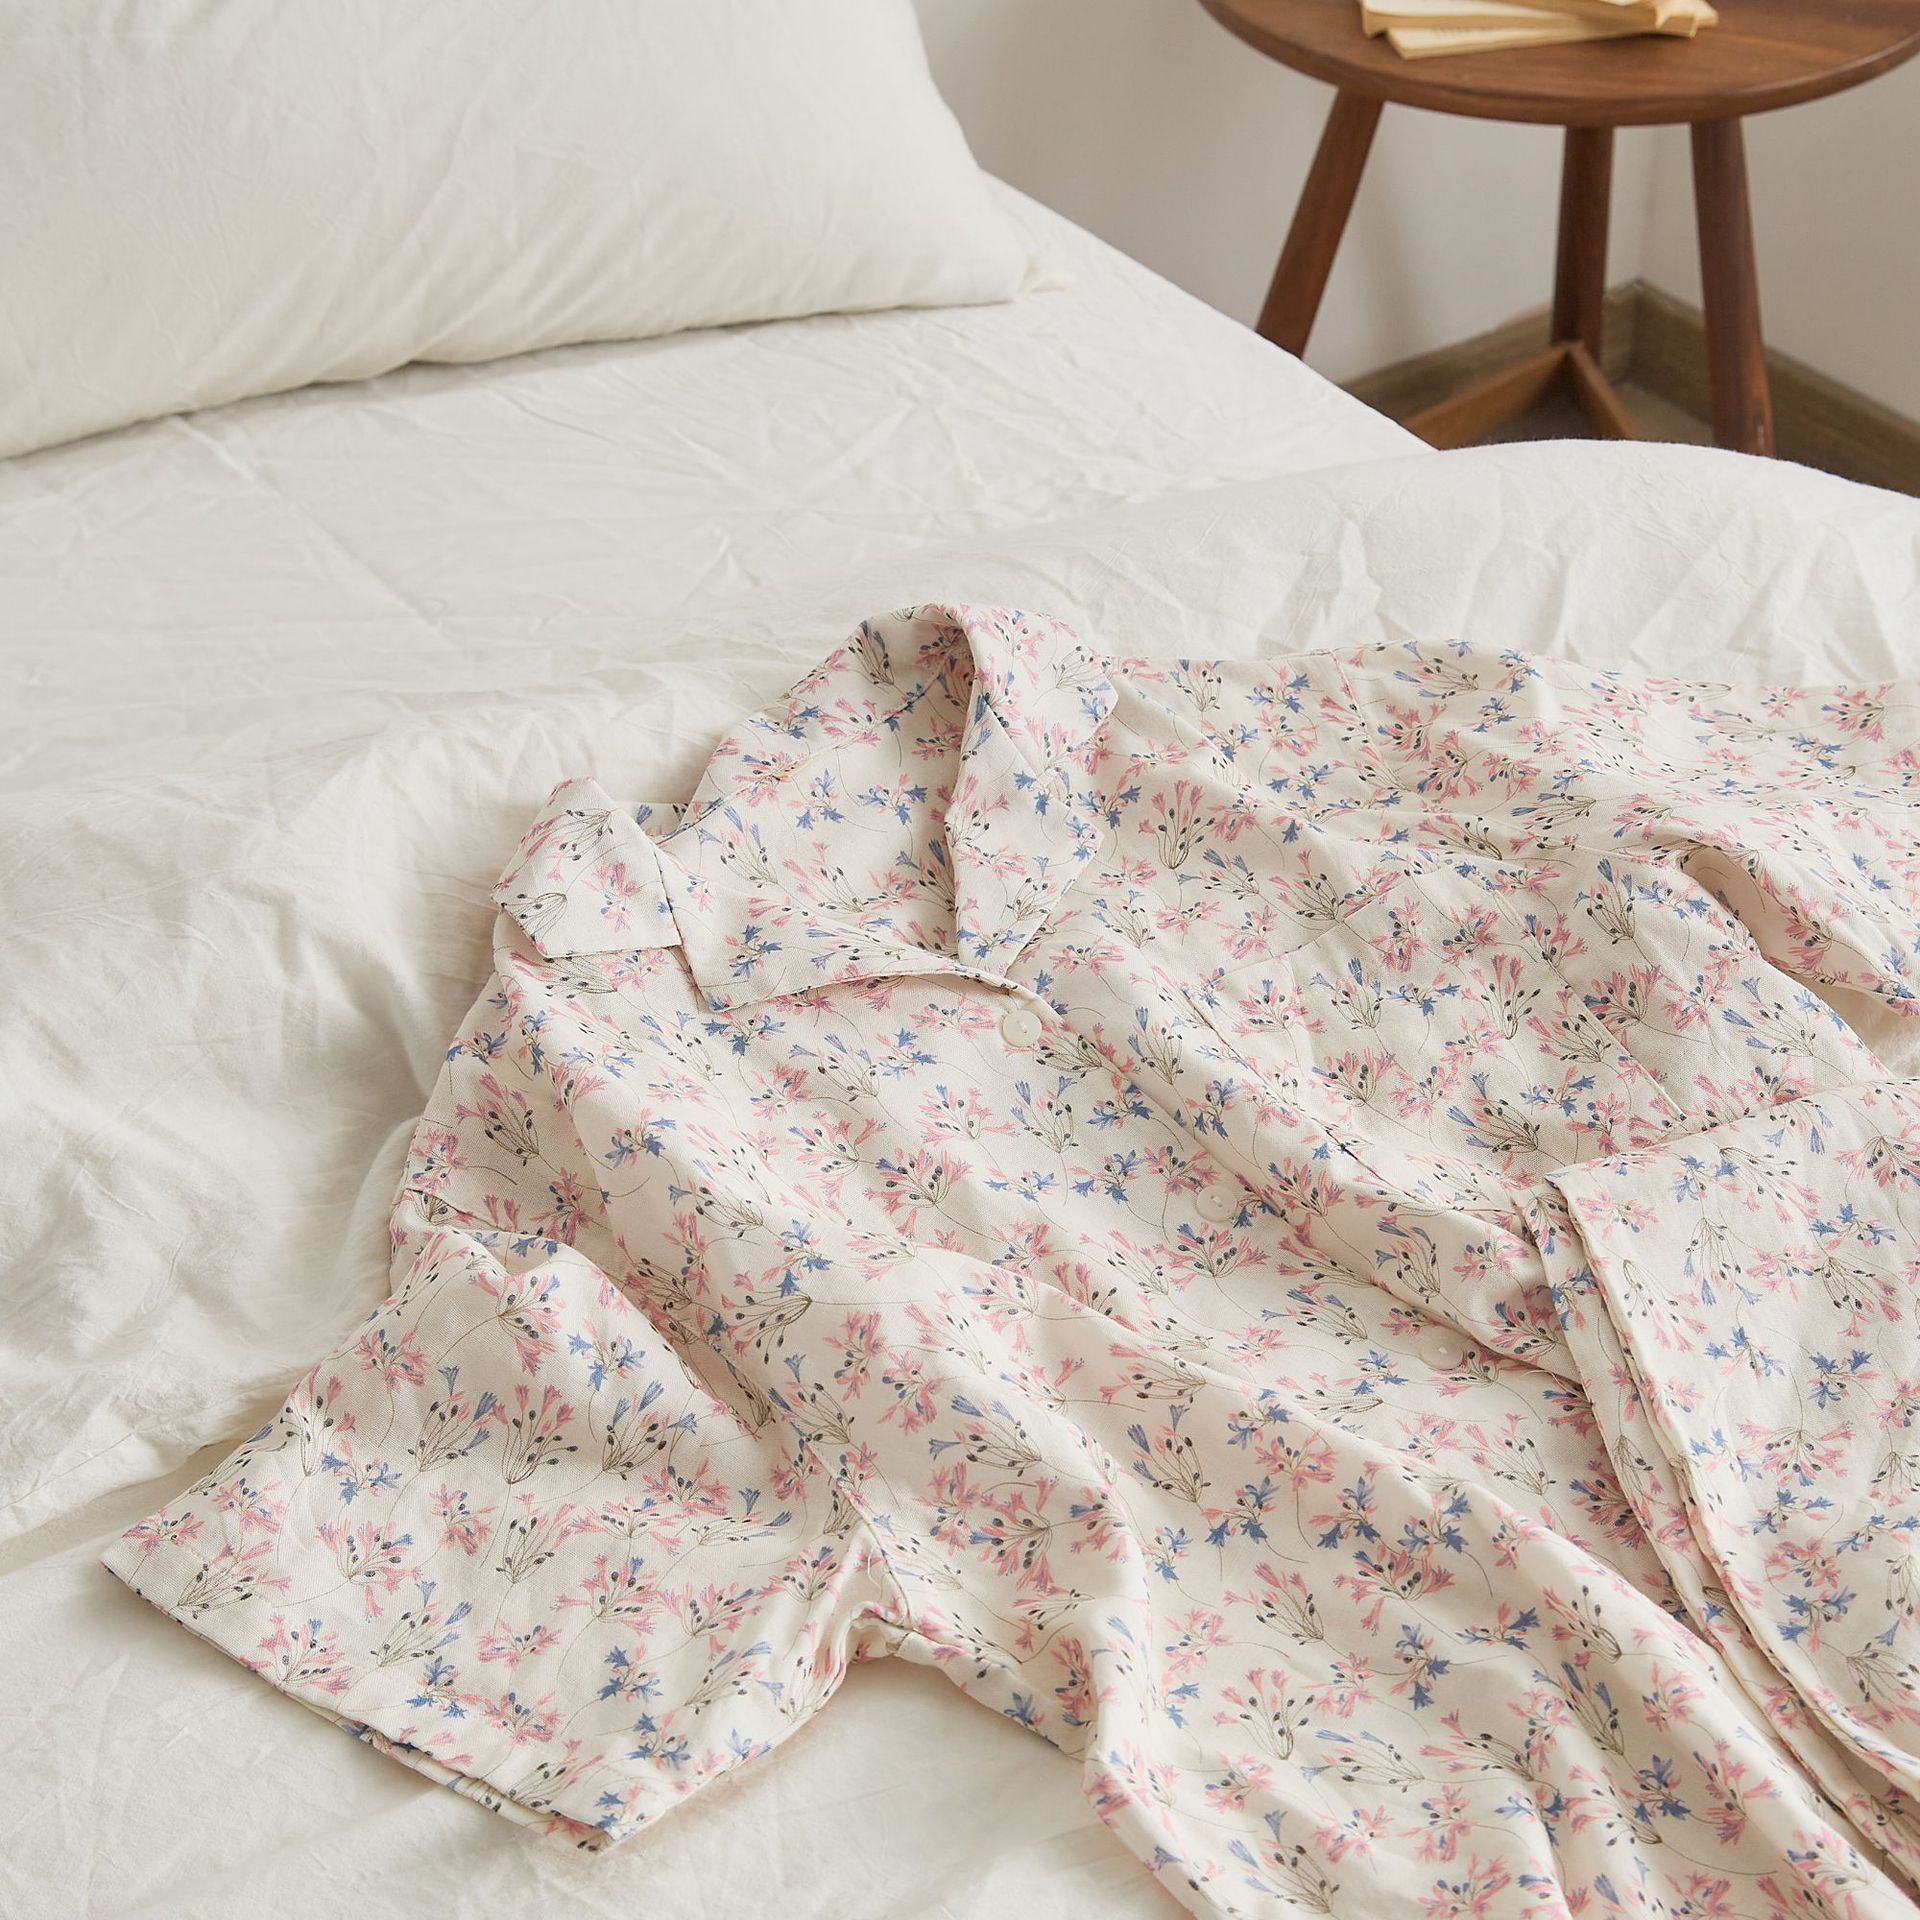 Comfortable and stylish natural loungewear pajamas 100٪ cotton pajamas Improves sleep quality